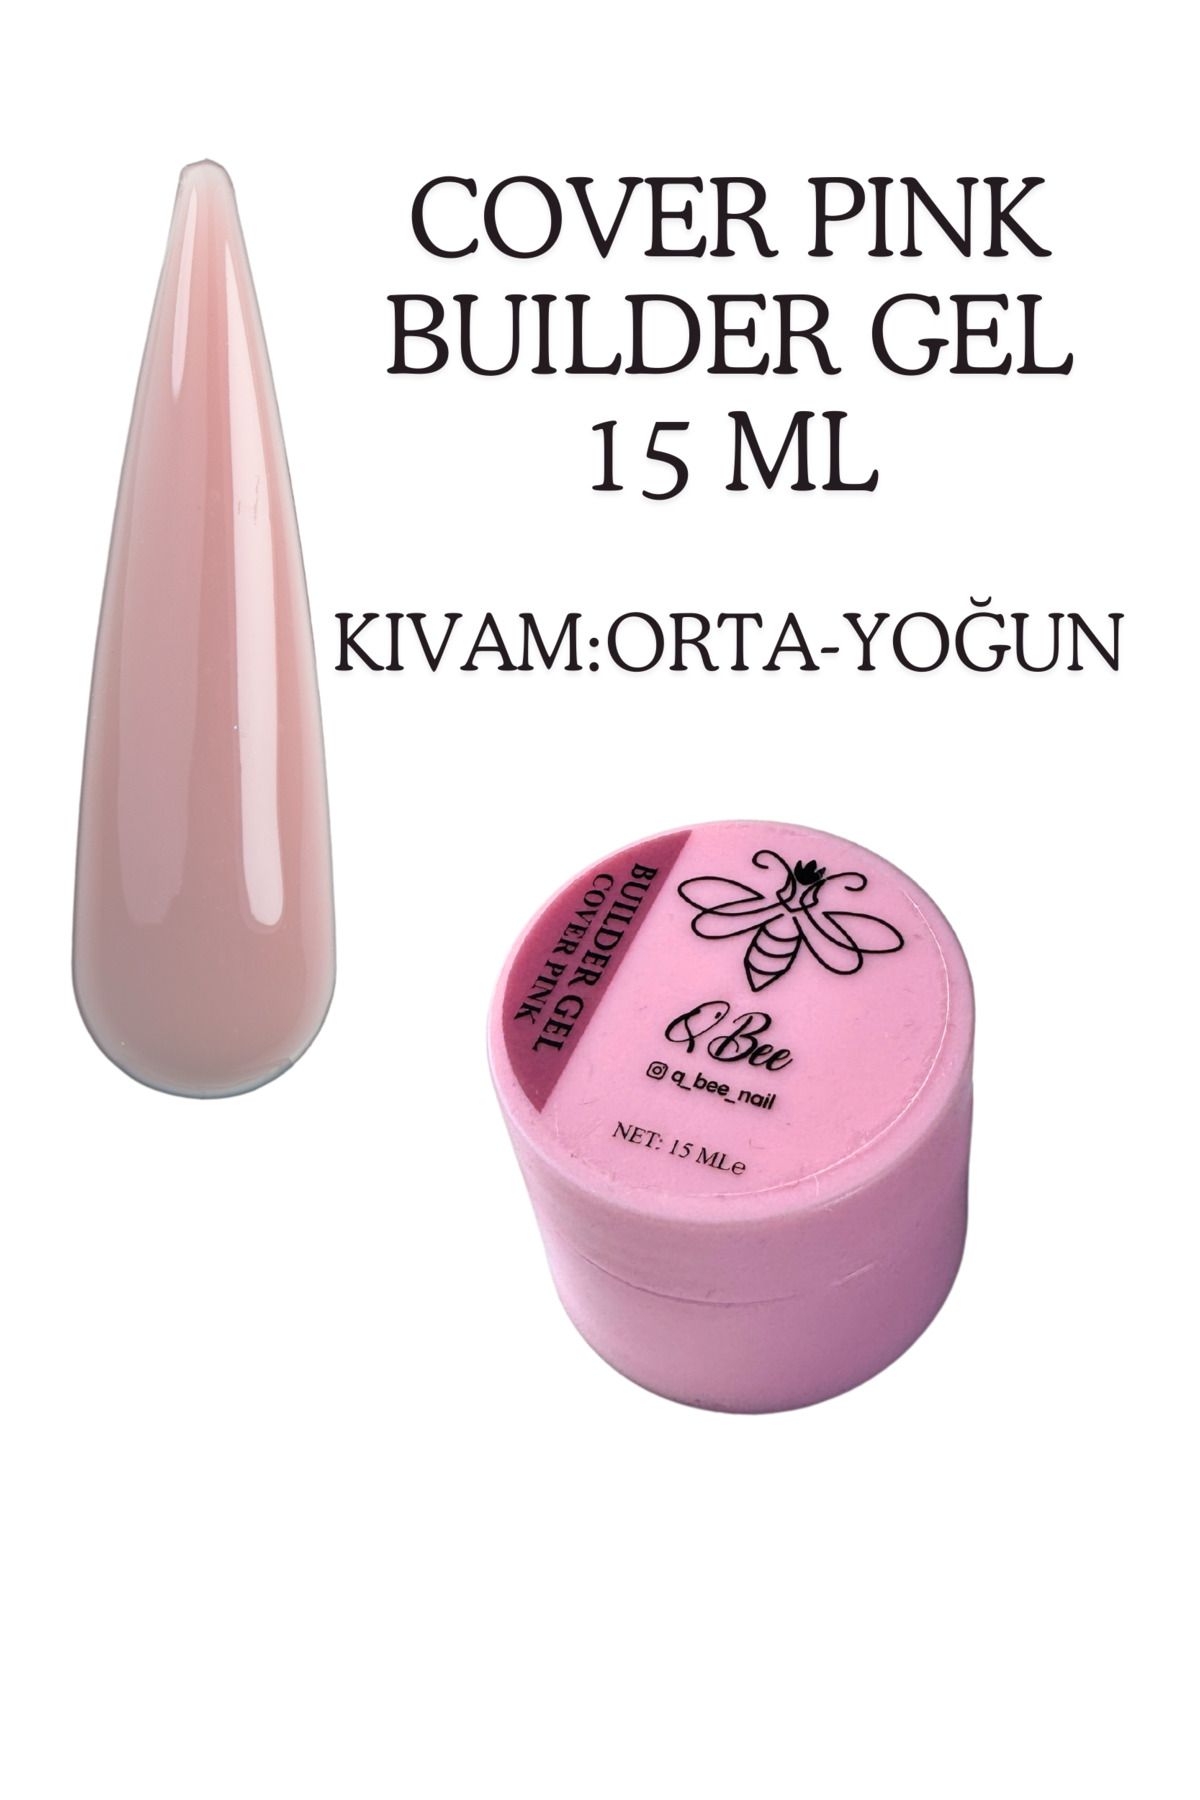 QBEE PROFESSIONAL 15ml Protez Tırnak Jeli Builder Gel Cover Pink